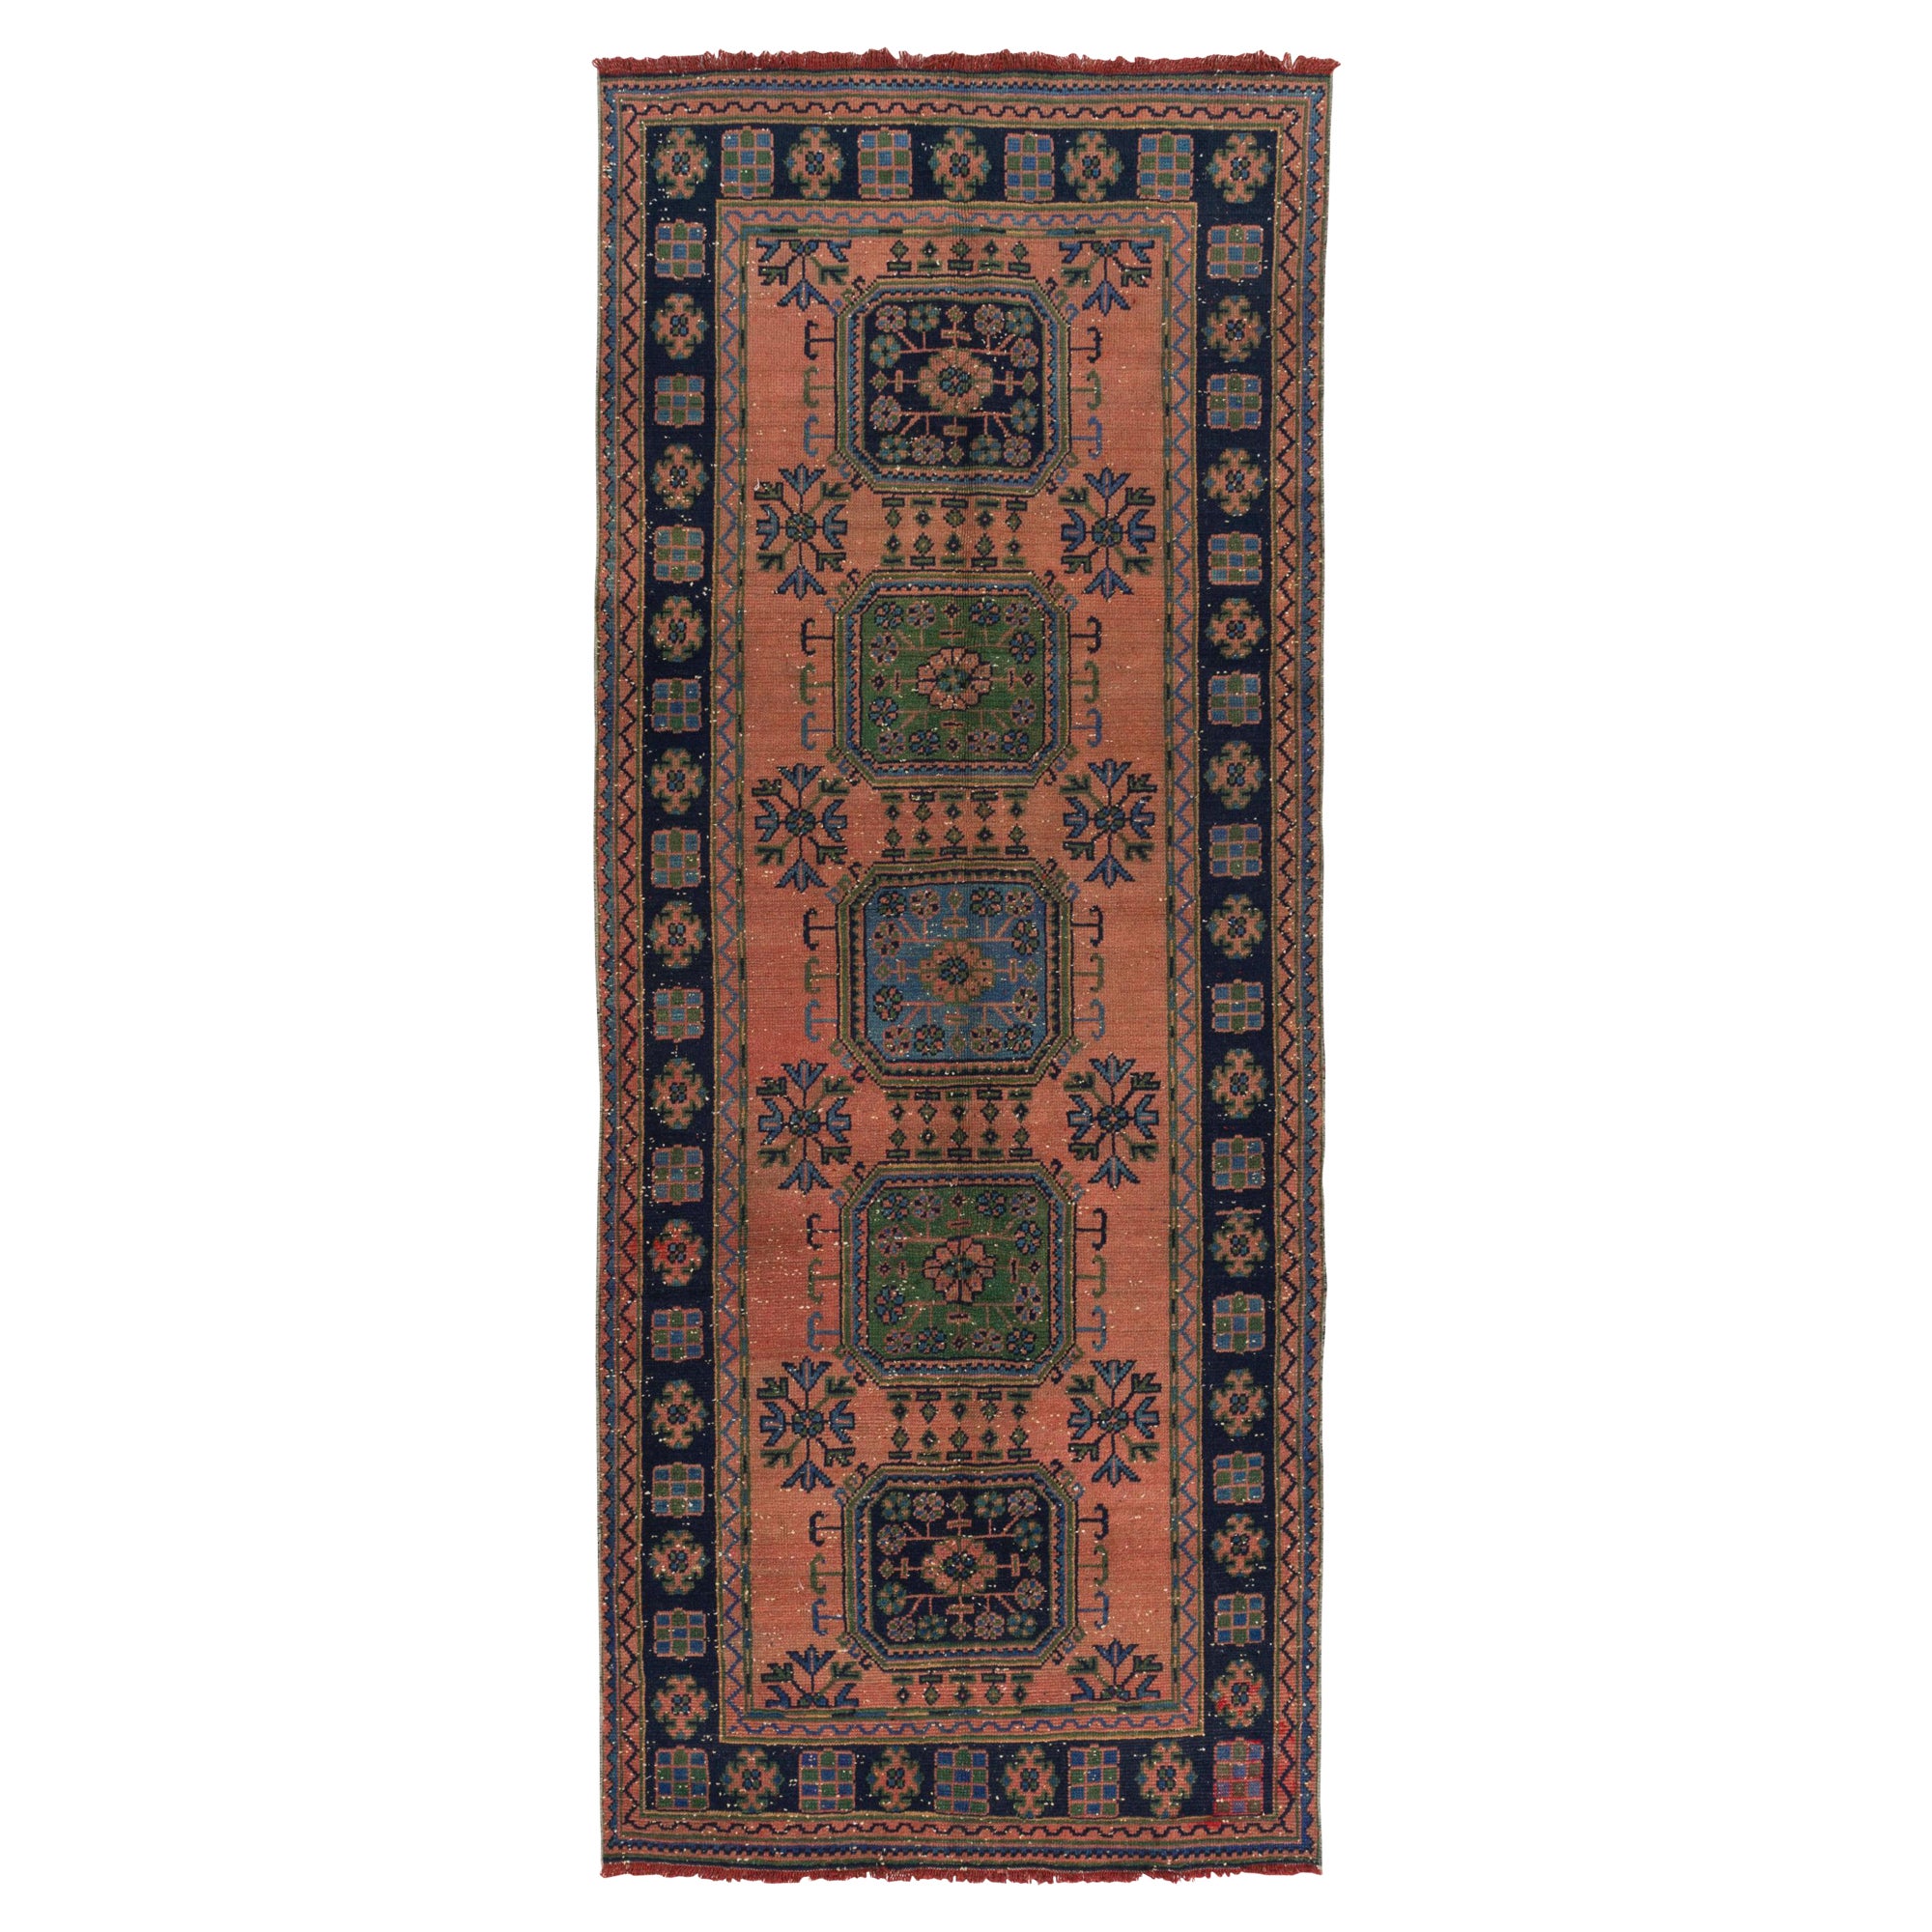 4.7x11 Ft Vintage Turkish Runner Rug, One of a kind Handmade Hallway Carpet